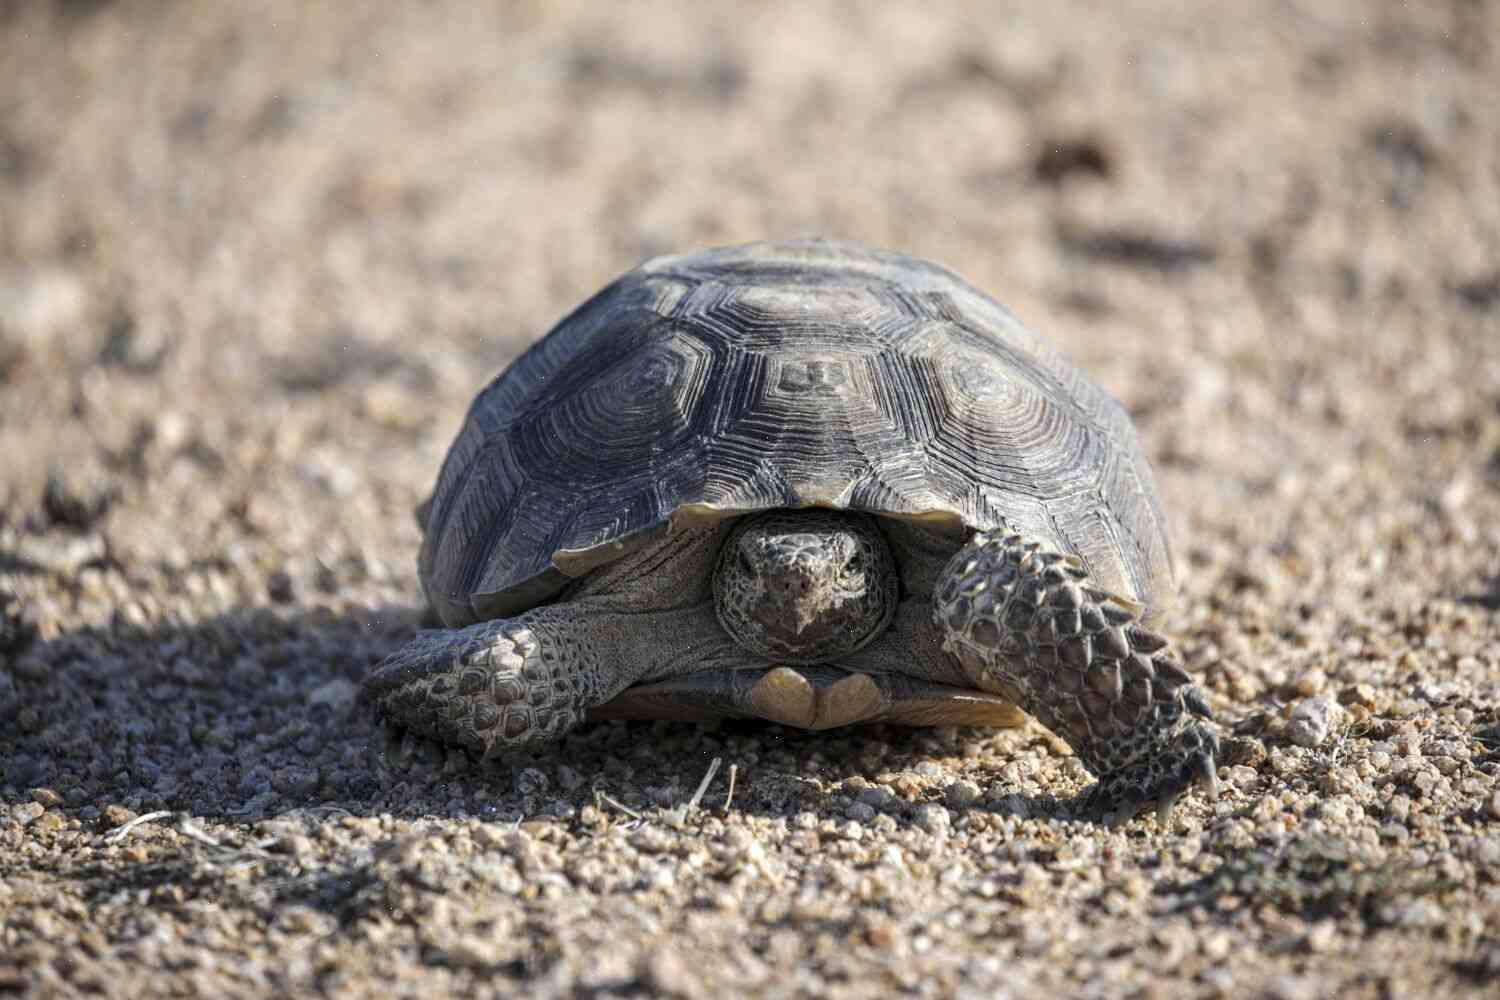 Desert tortoises are on their way to extinction